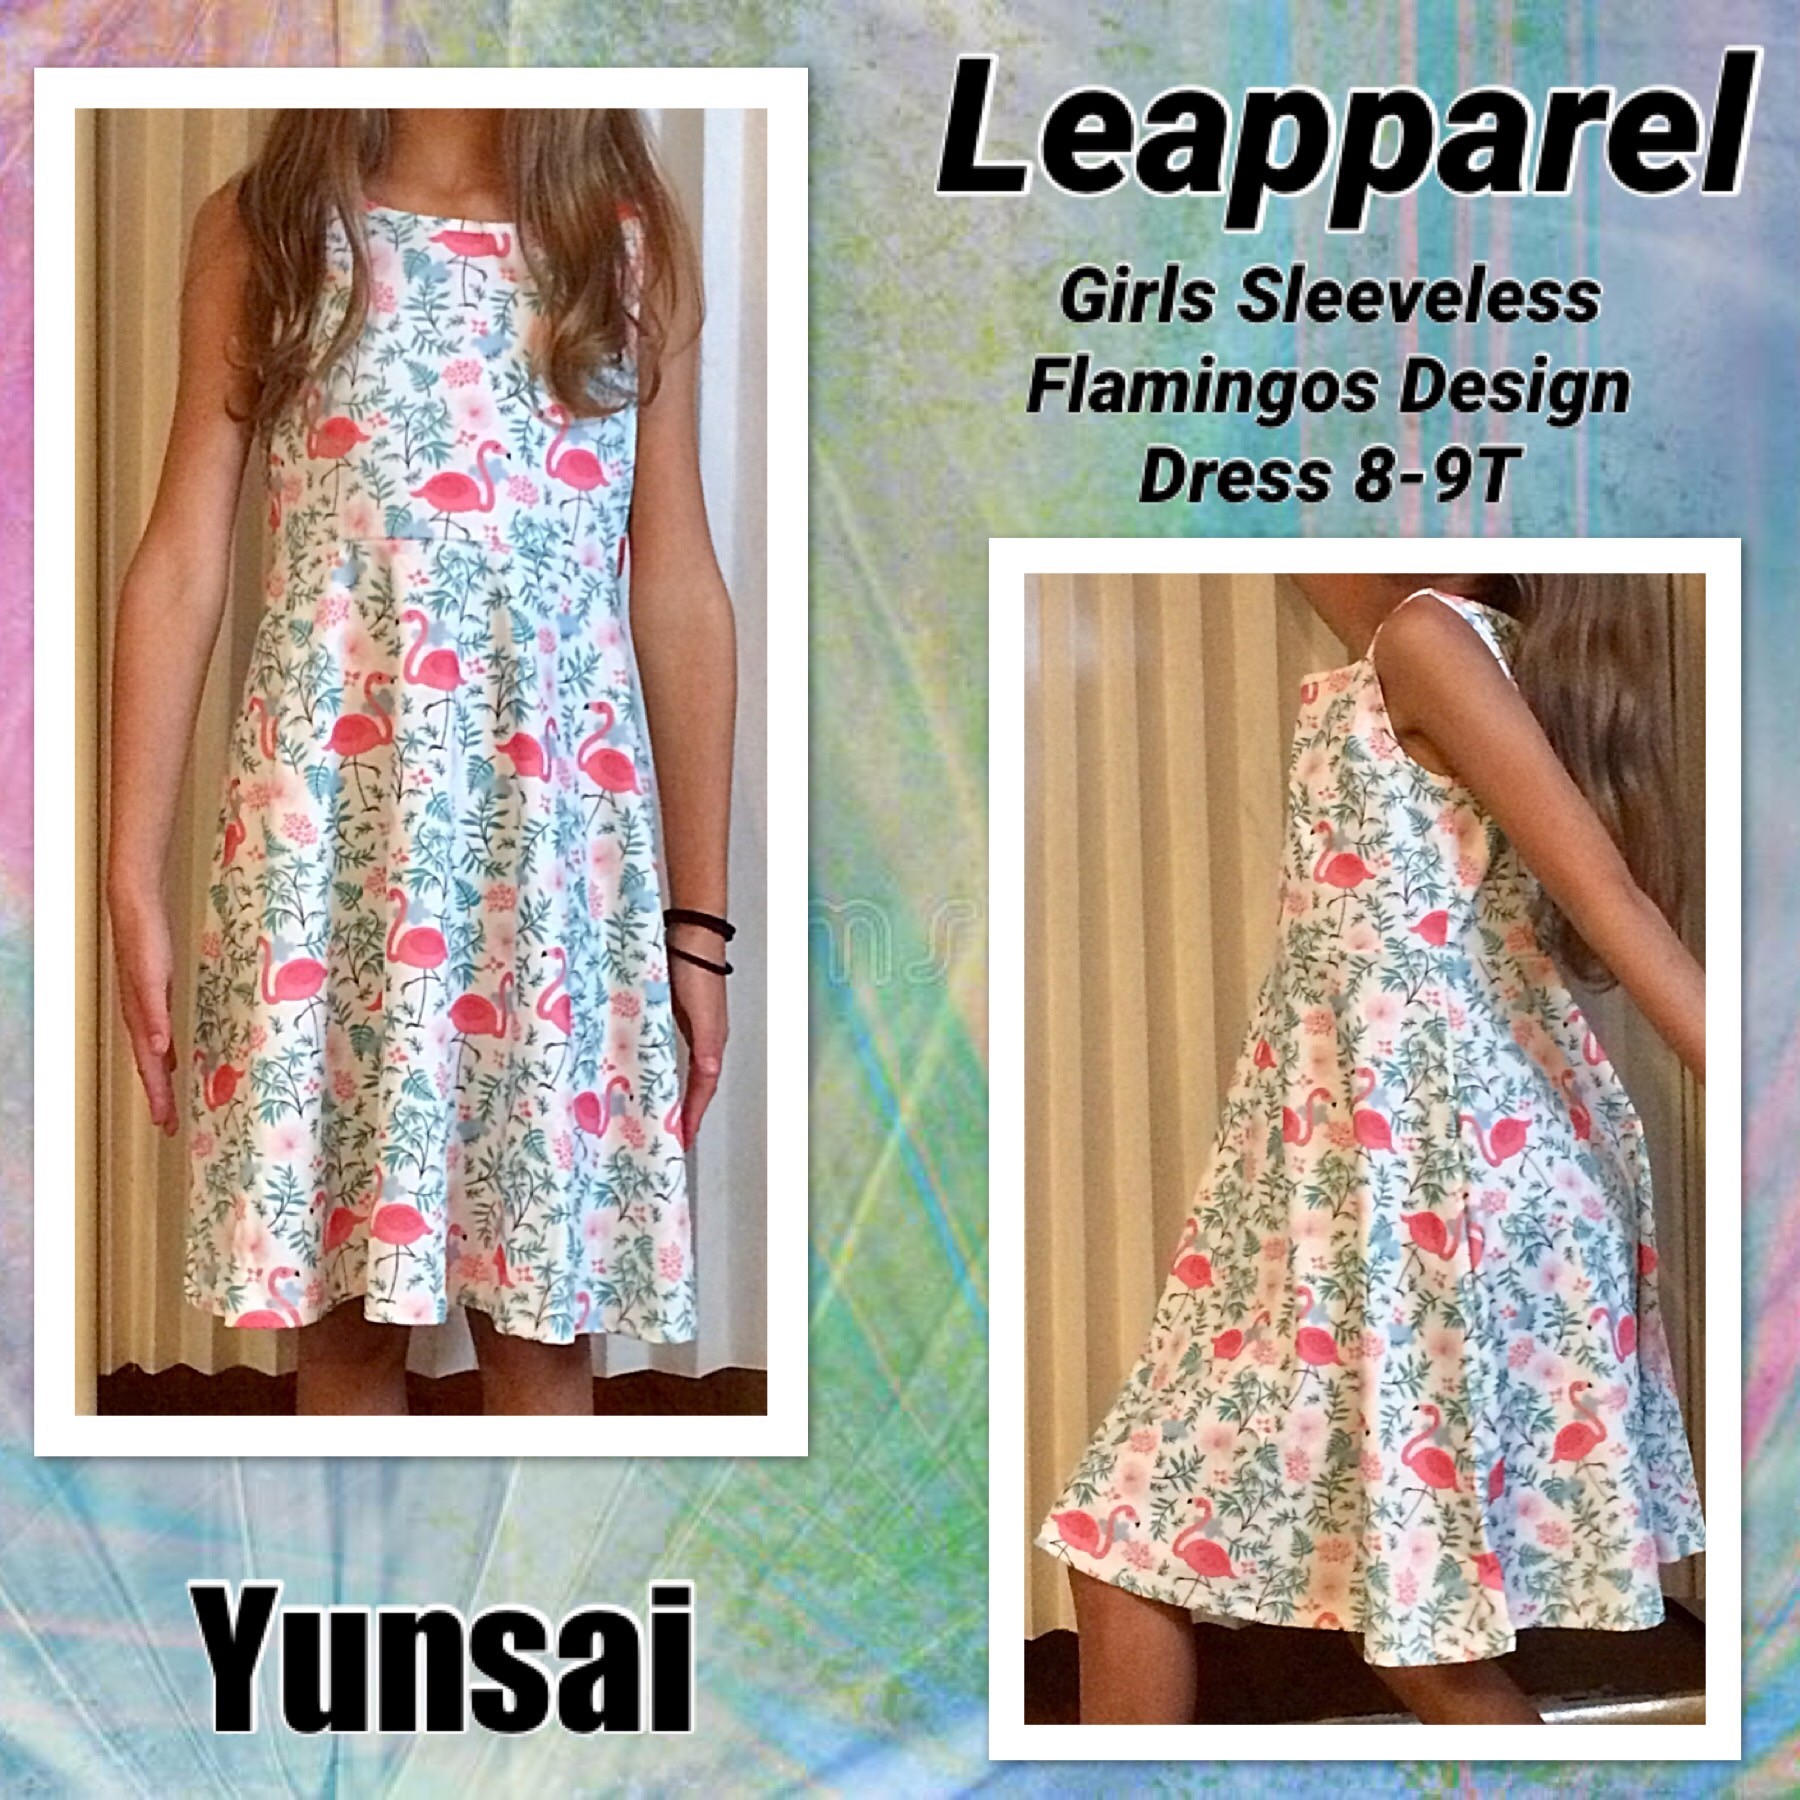 Leapparel Fancy Dresses For Toddlers Girls Mini Sleeveless Flamingo Design 8-9T